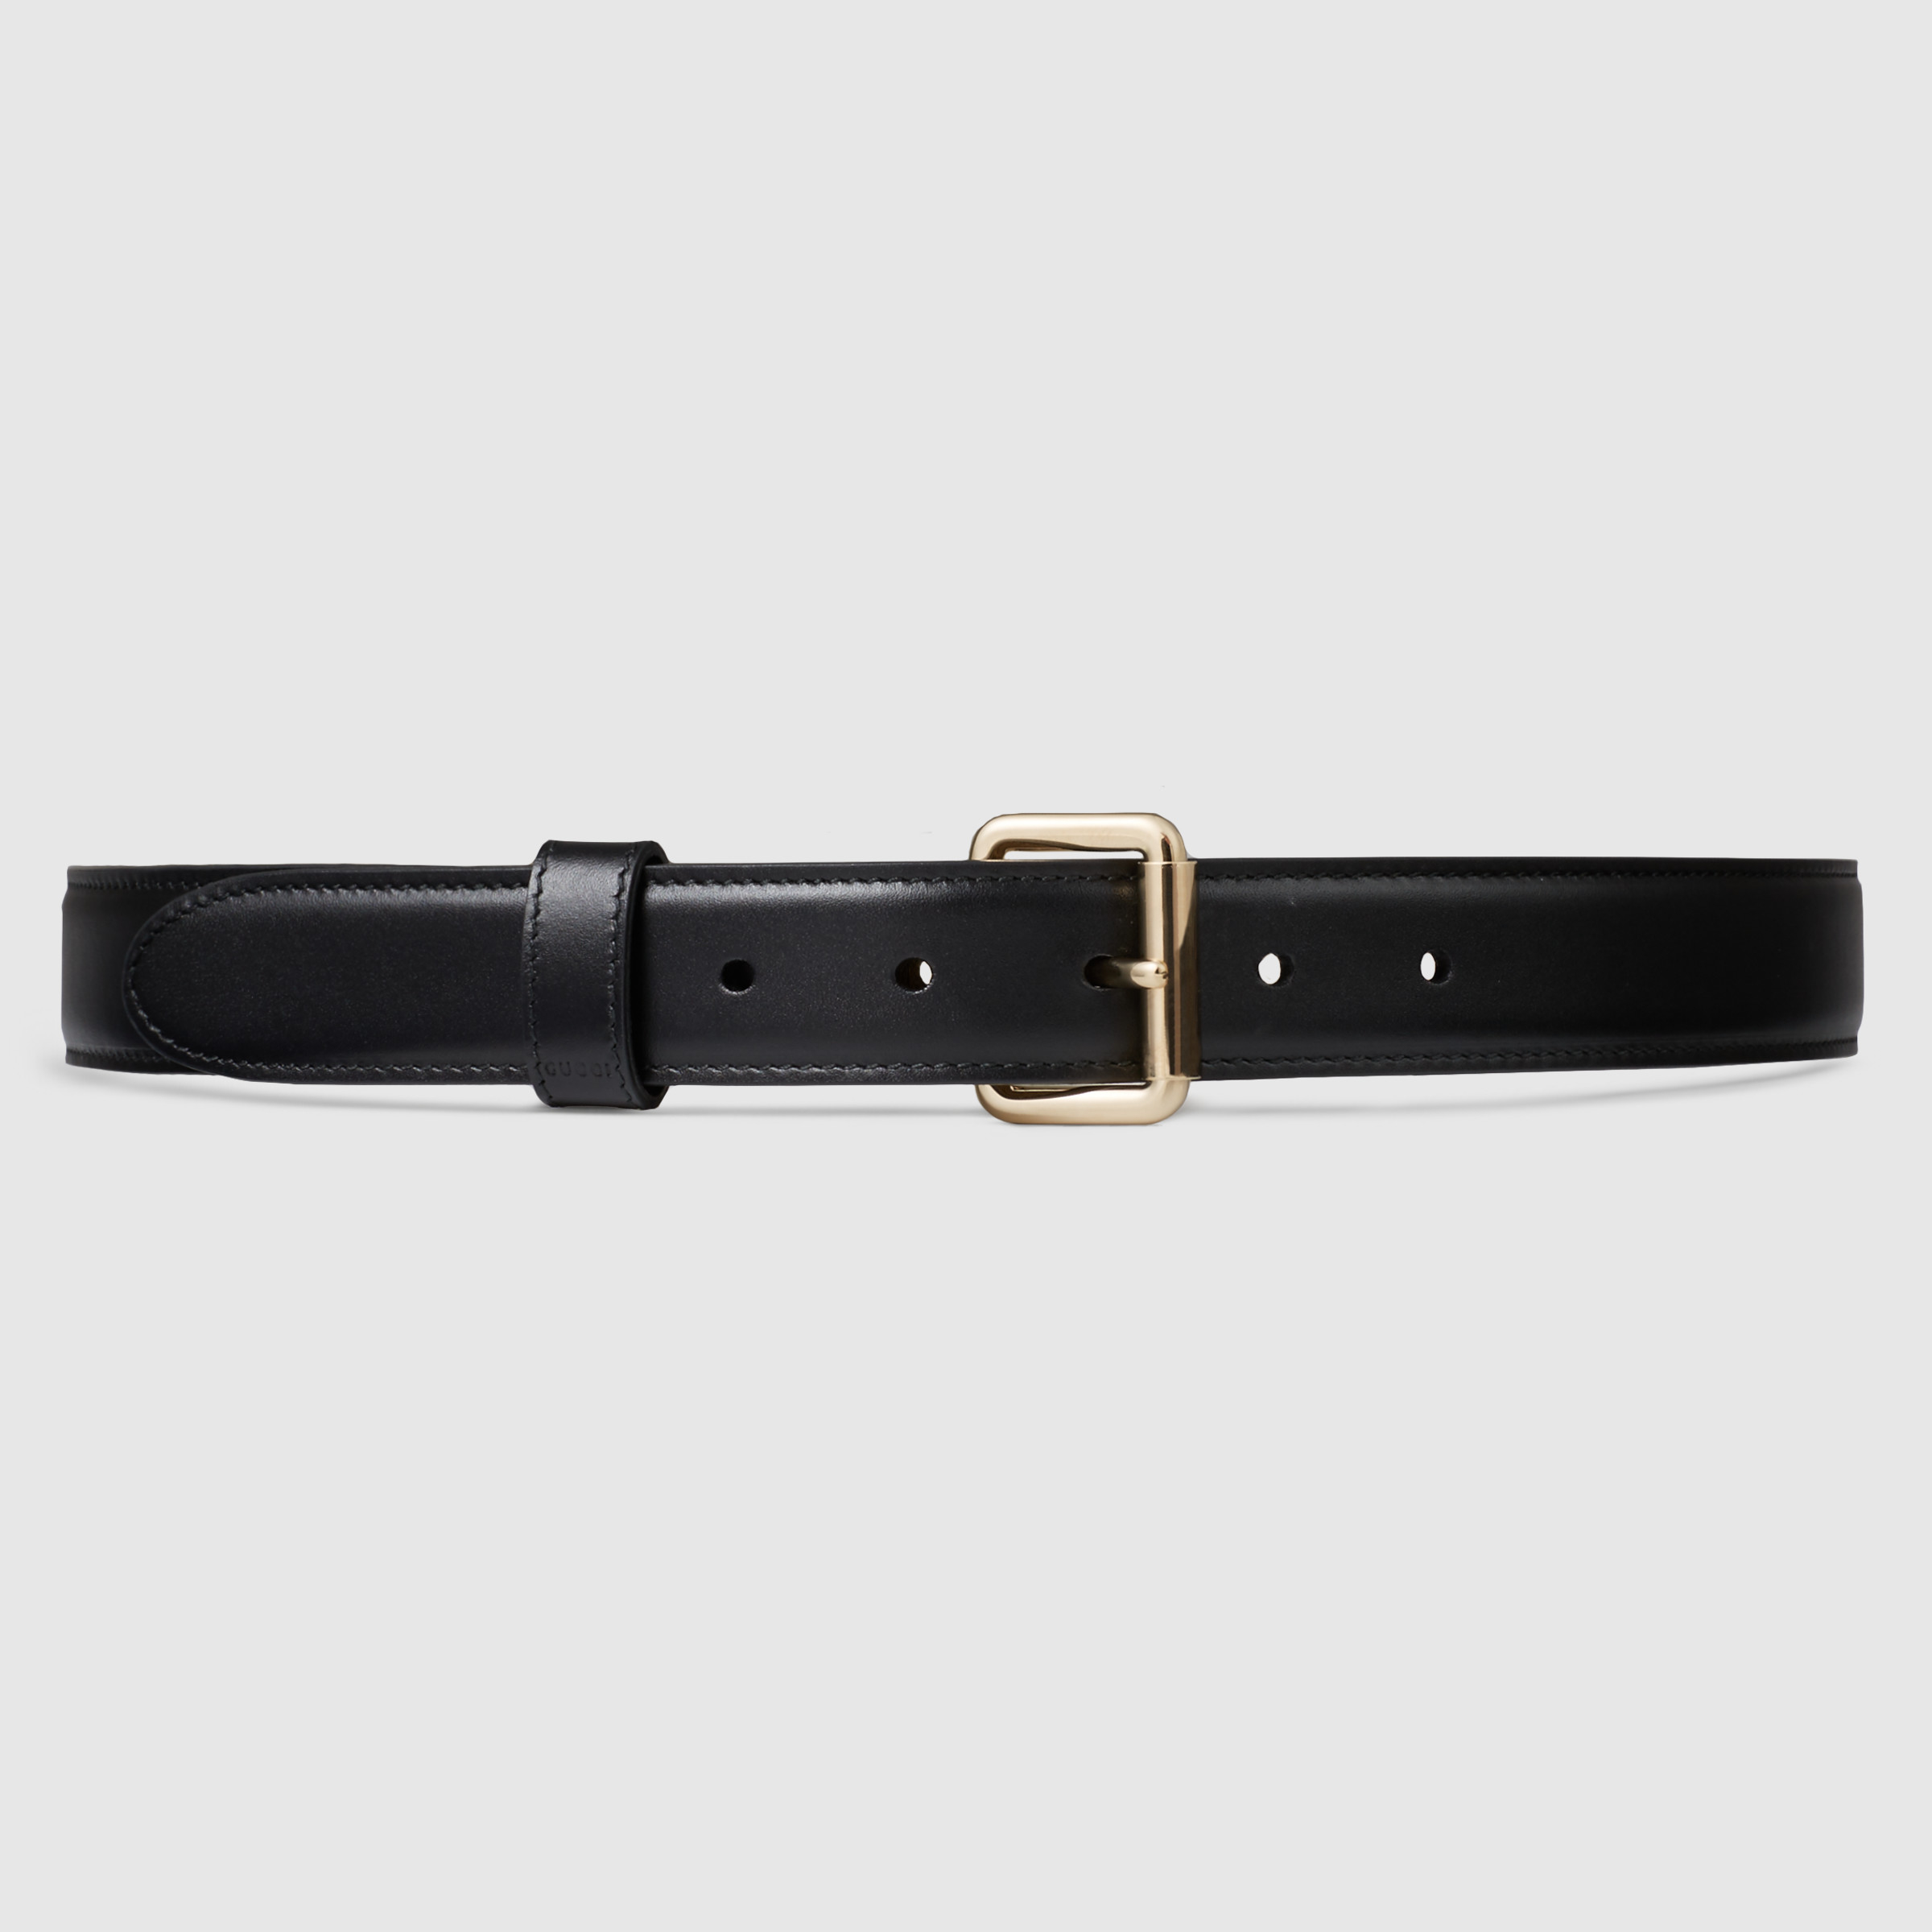 Gucci Reversible Leather Belt in Black for Men - Lyst